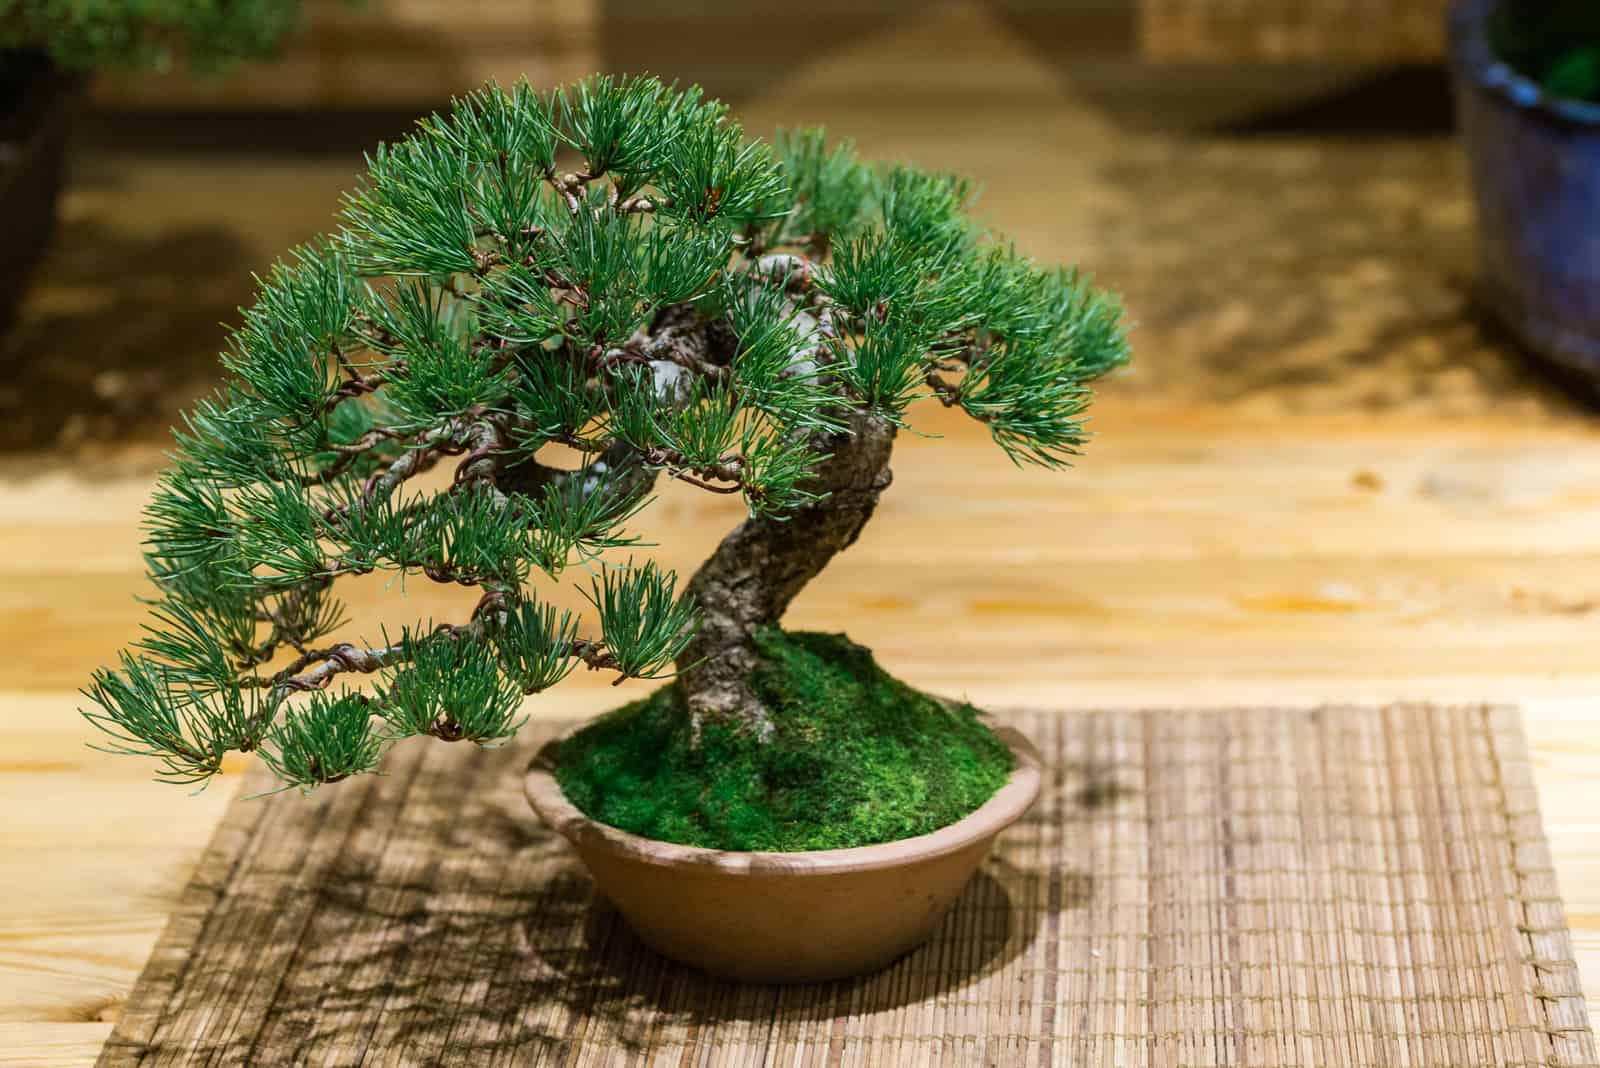 bonsai tree on the table